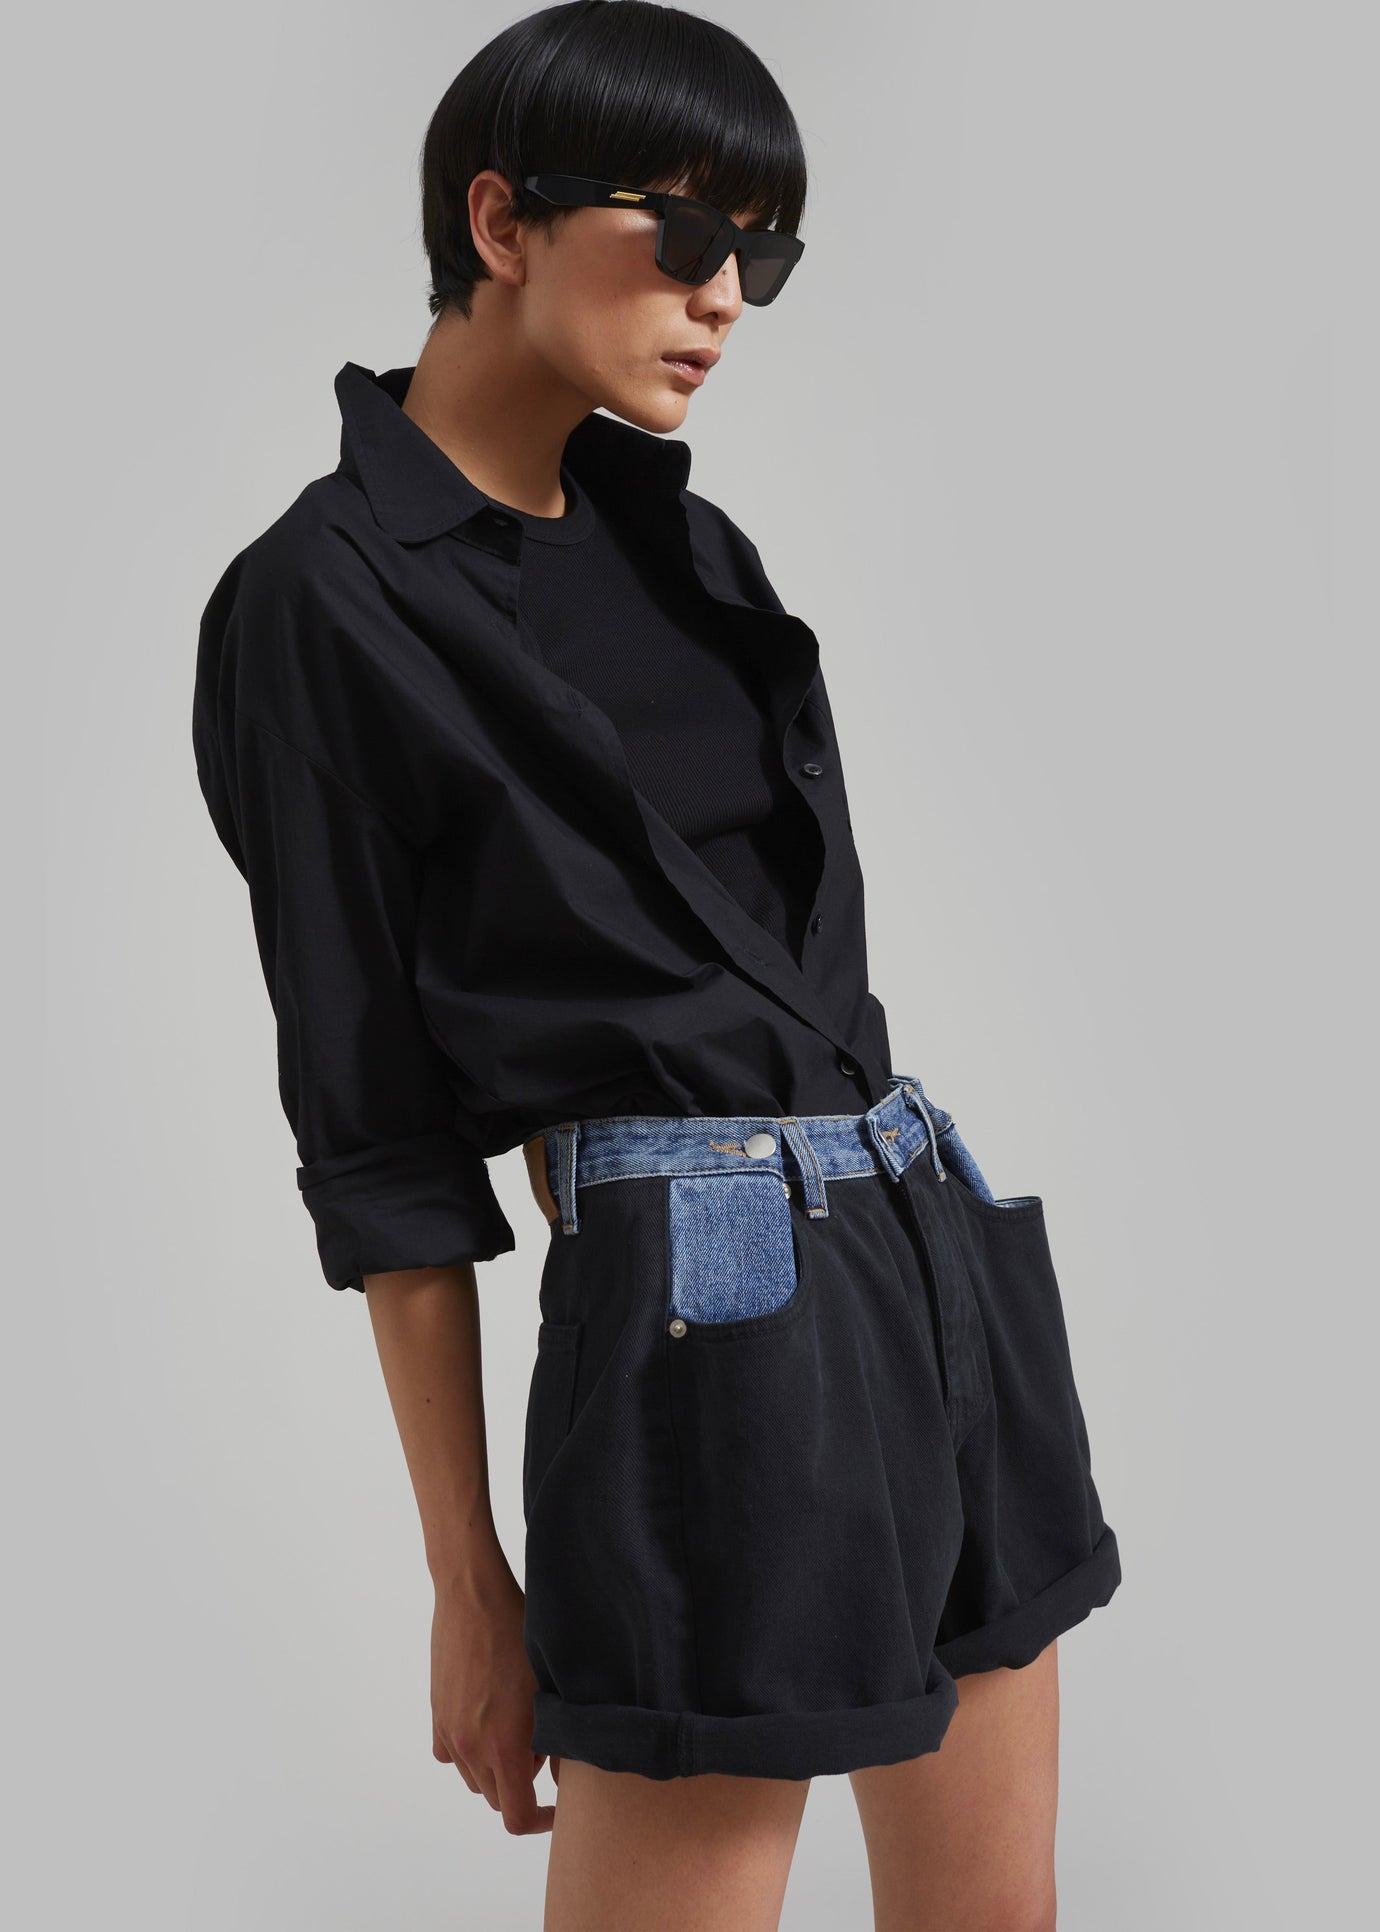 Hayla Contrast Denim Shorts - Black/Blue - 1